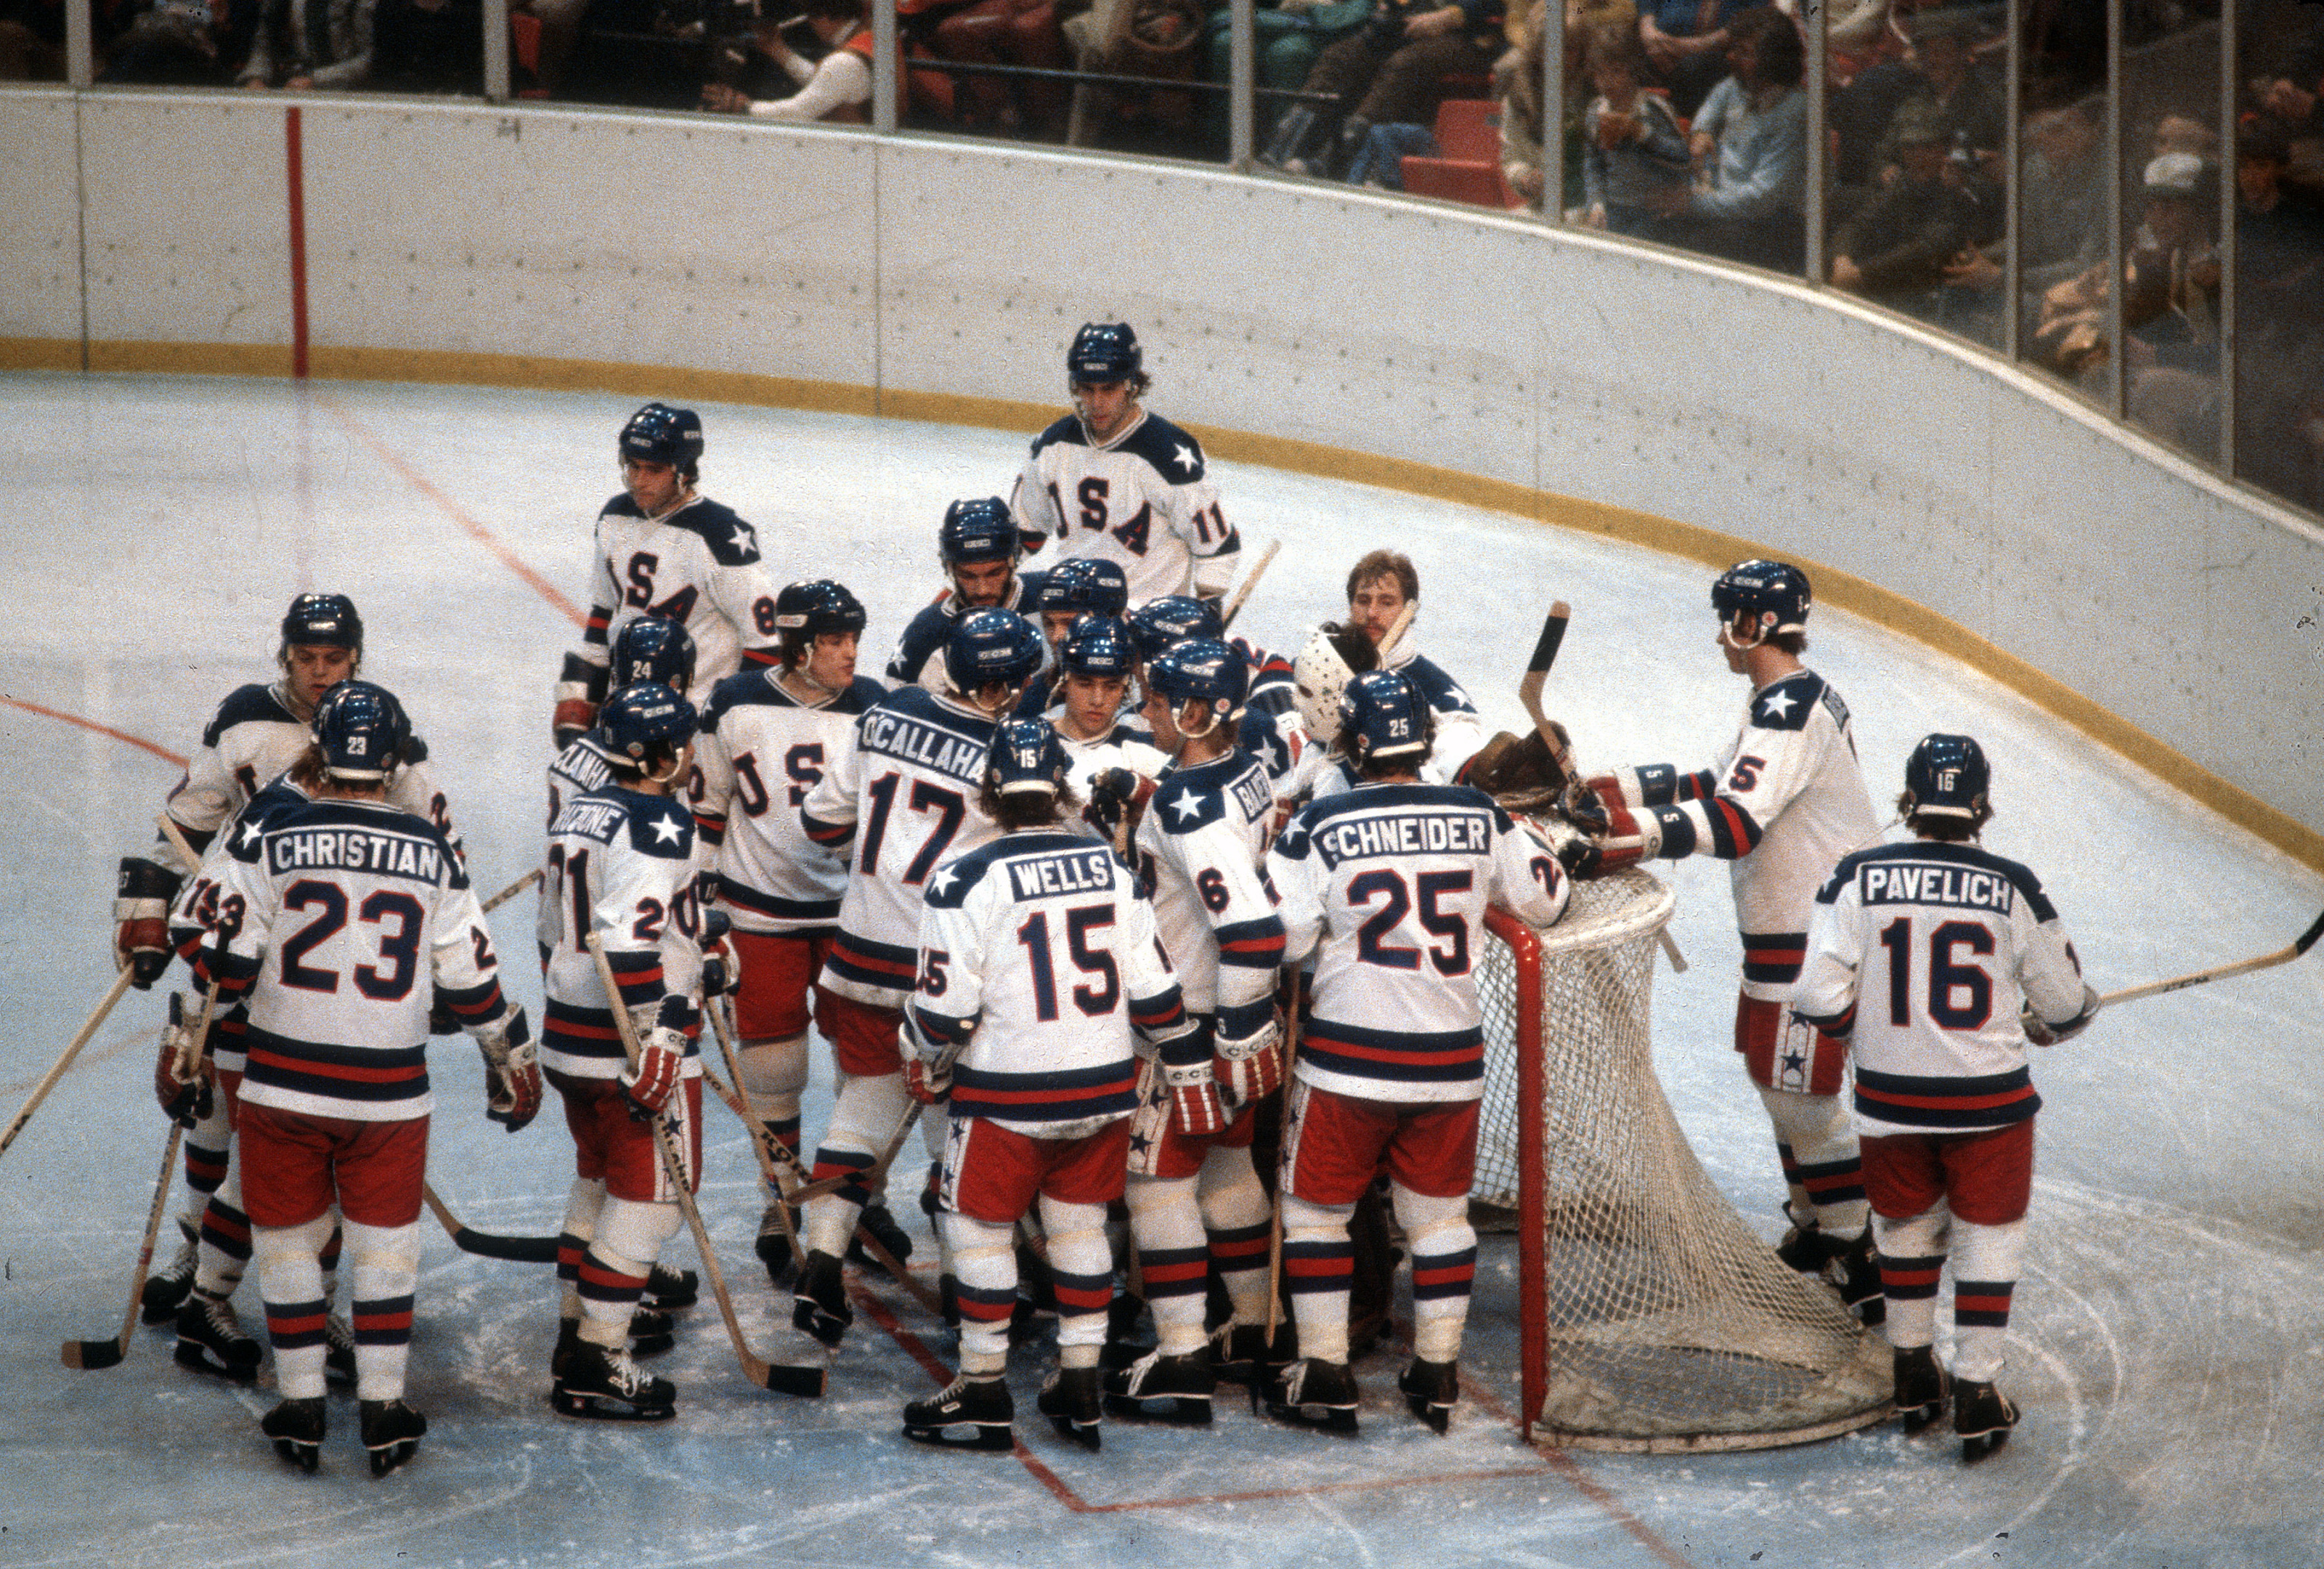 Photos: USA's Miracle of Ice win at 1980 Lake Placid Olympics